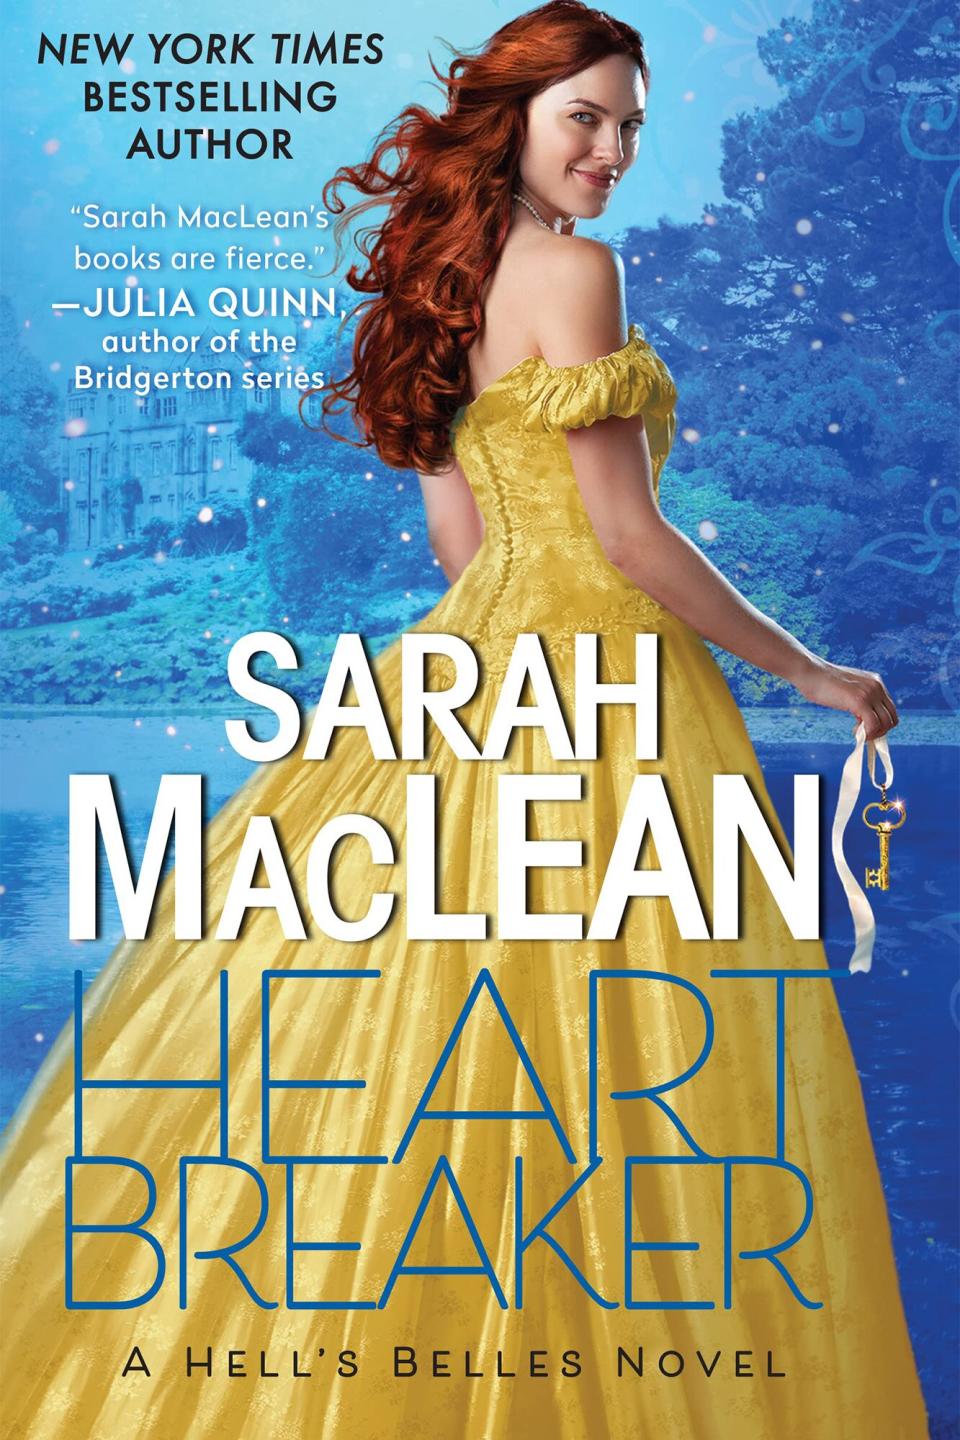 Heartbreaker: A Hell's Belles Novel (Hell's Belles, 2) Hardcover – August 23, 2022 by Sarah MacLean